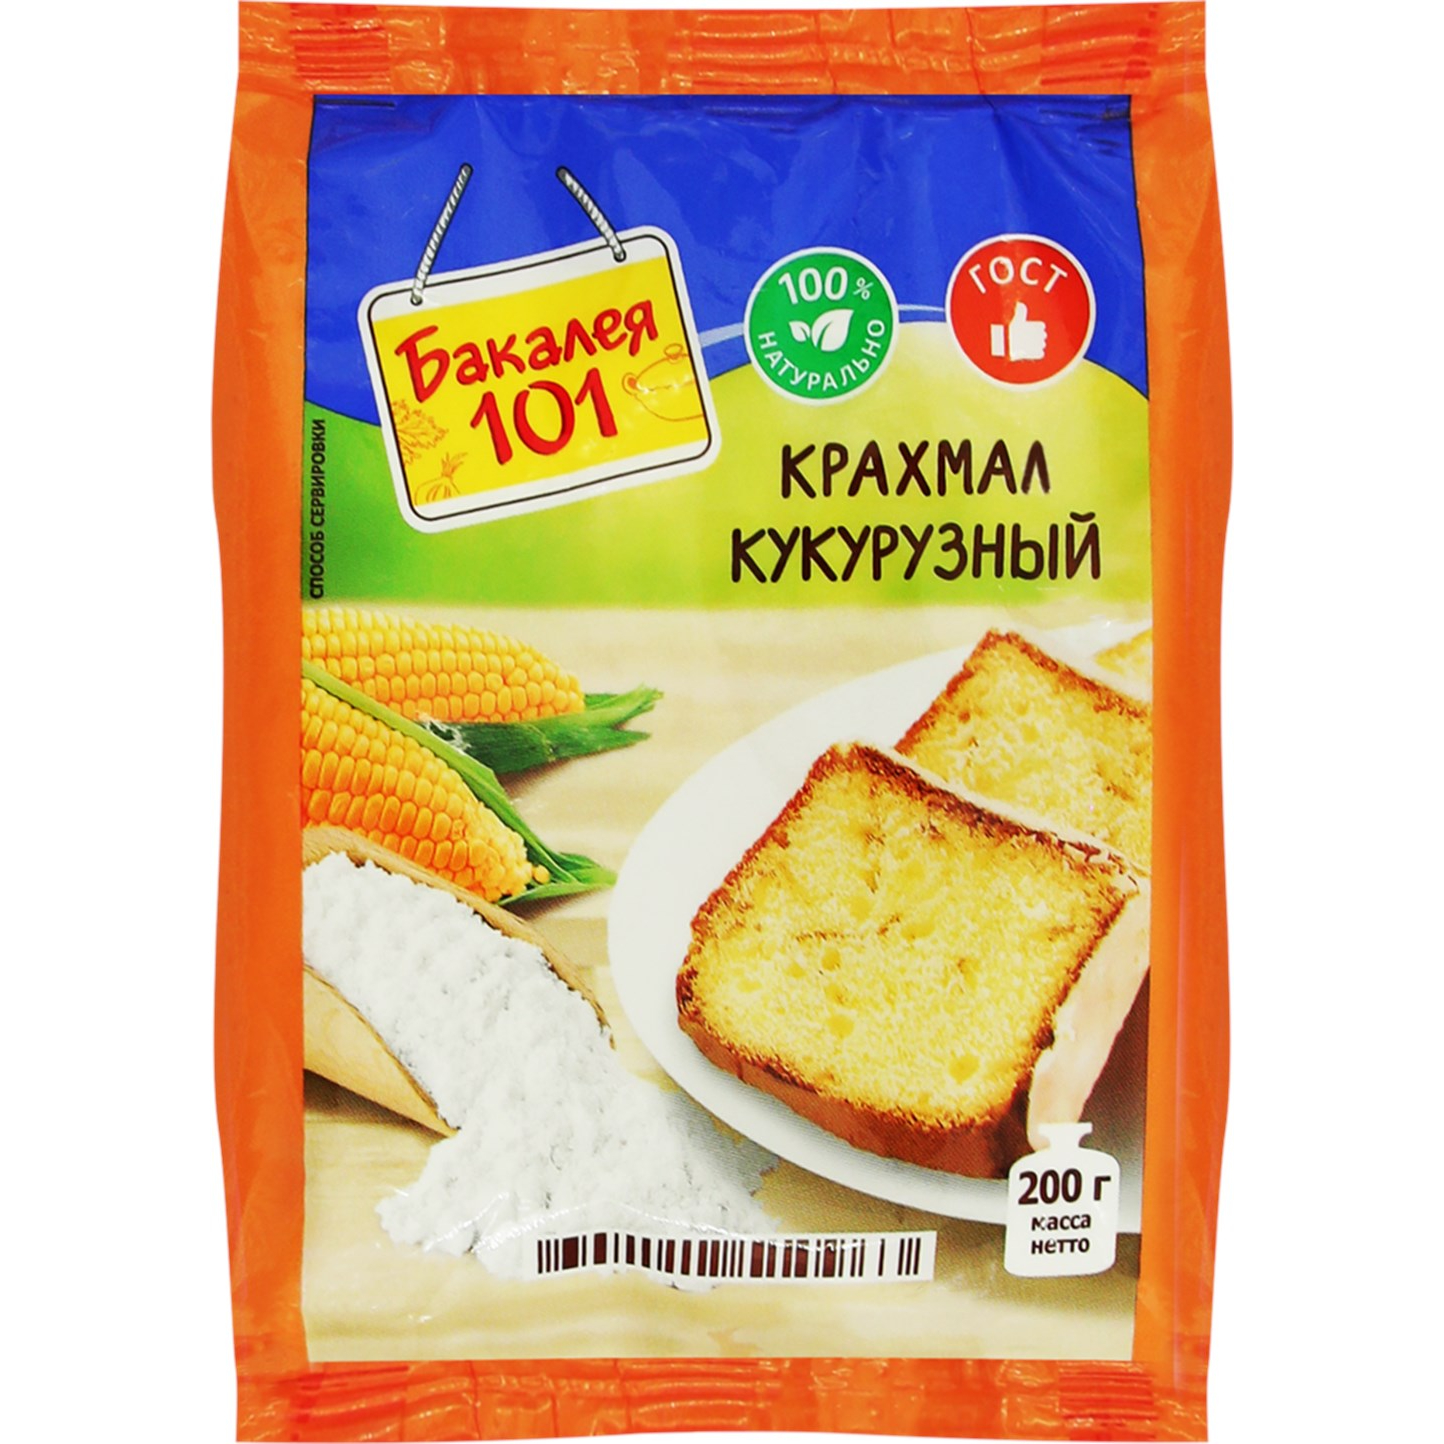 Крахмал кукурузный Русский продукт Бакалея 101 200 г крахмал распак кукурузный 200 г